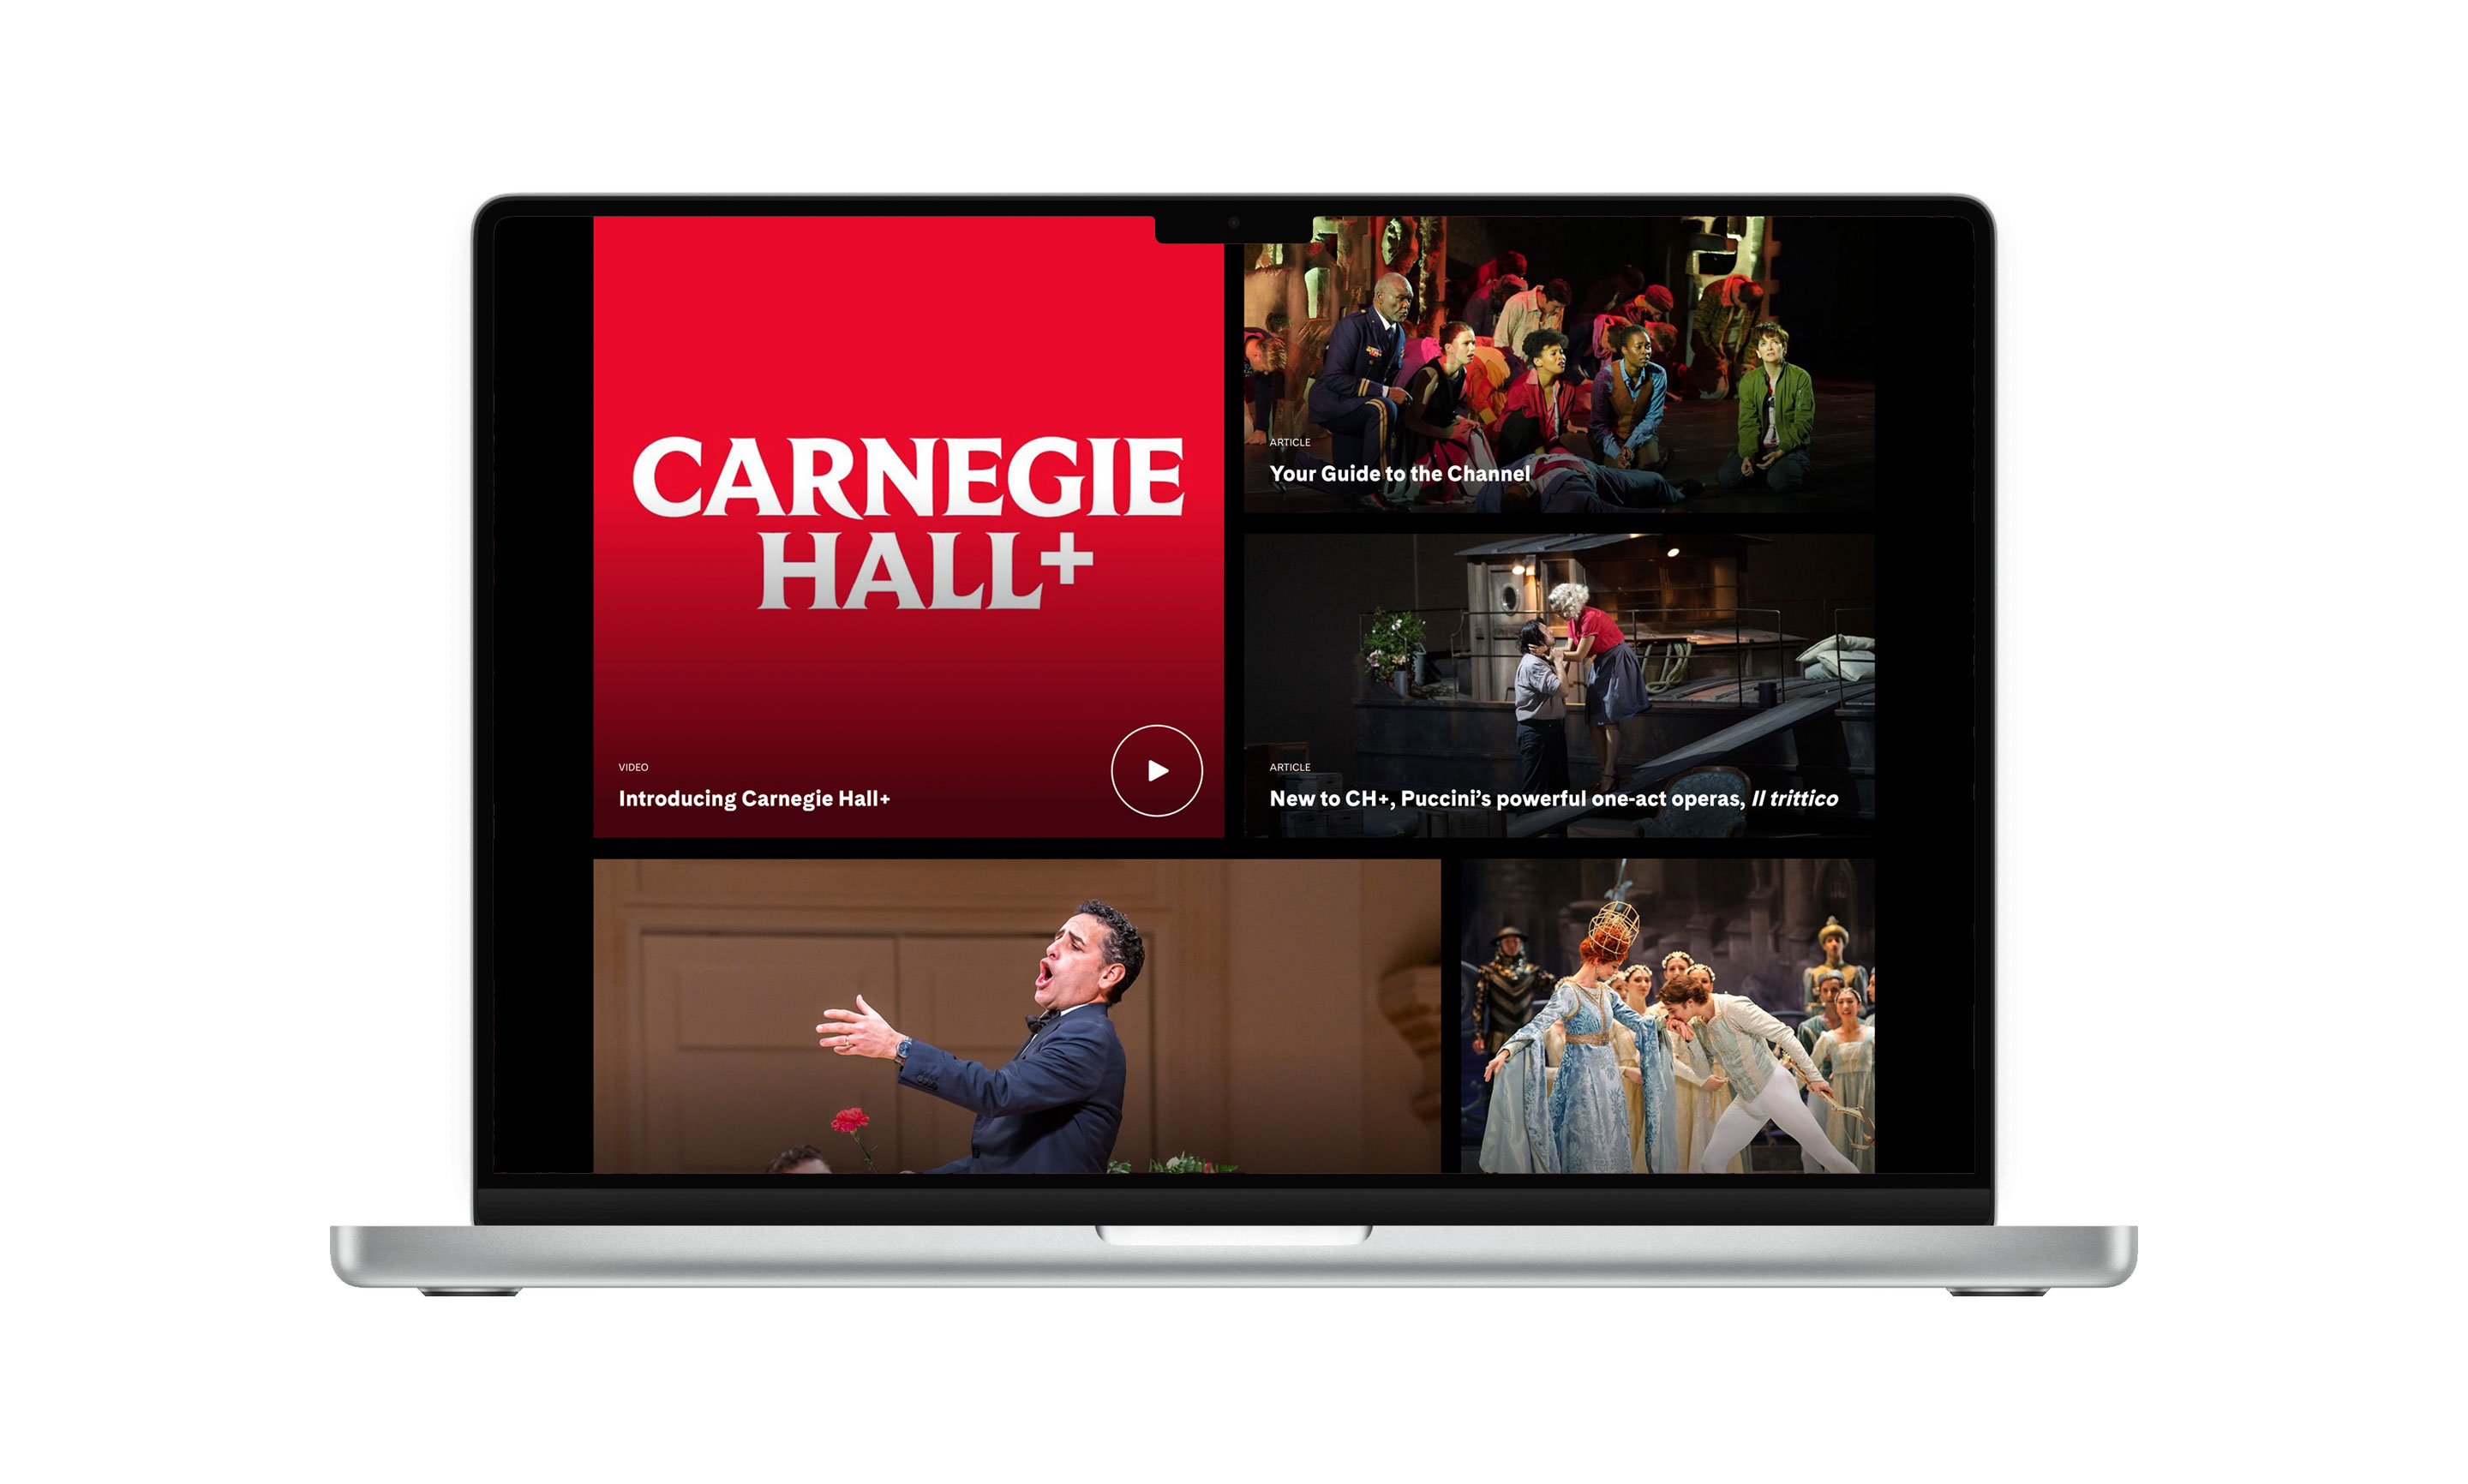 screenshot of Carnegie Hall + homepage